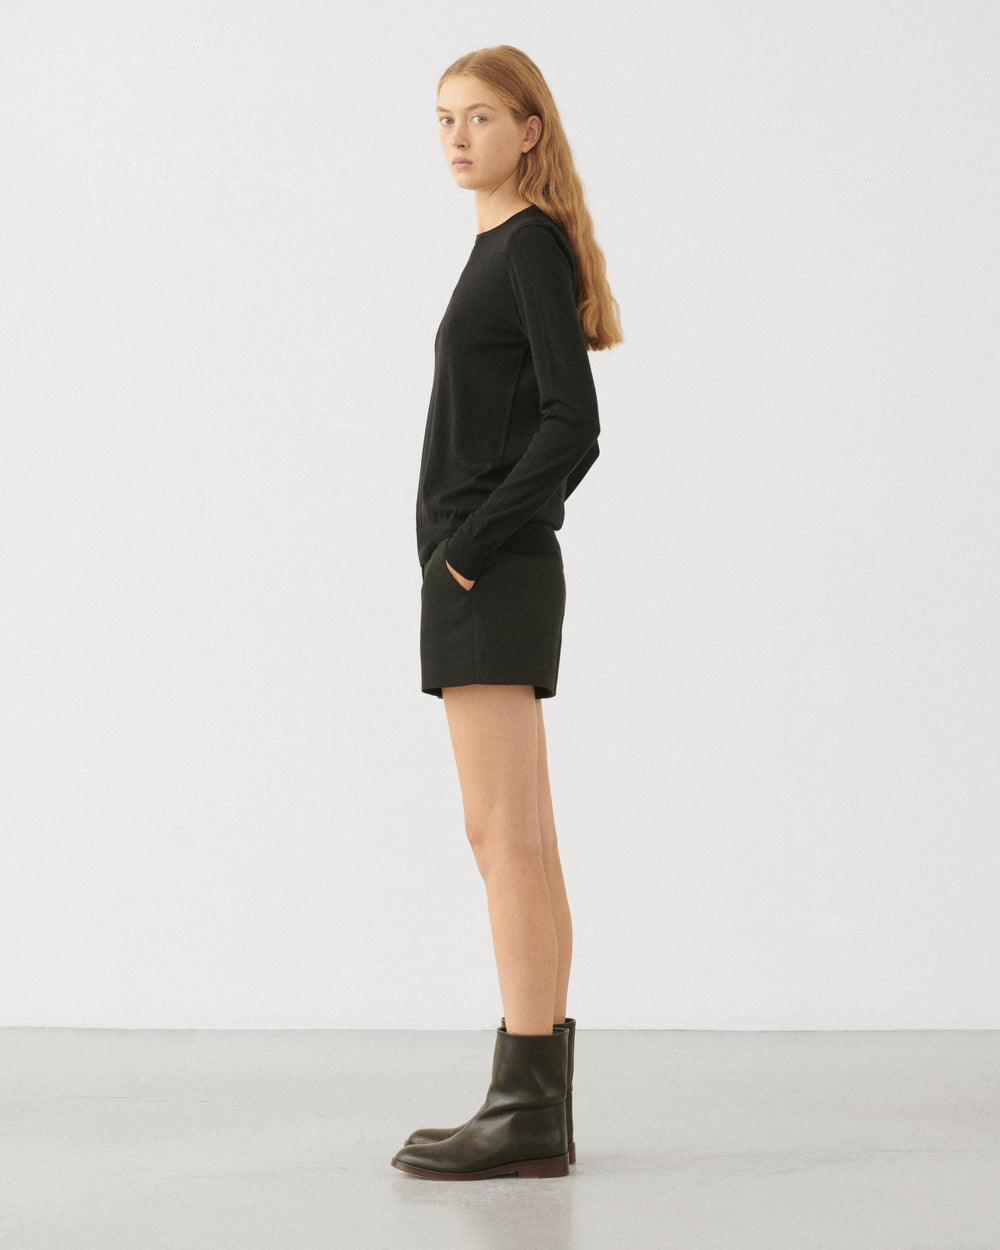 Lucy Sweater in Merino Wool, Black